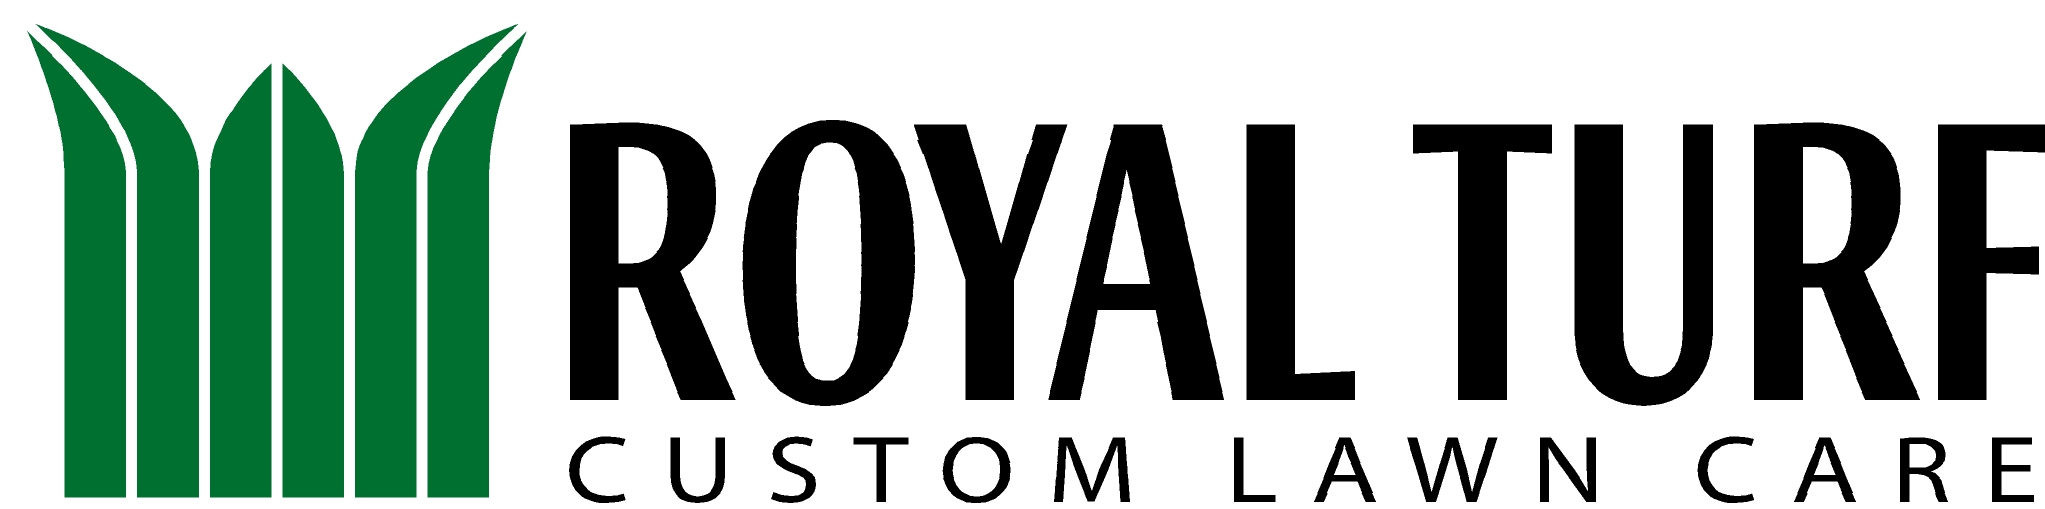 Royal Turf Custom Lawn Care, Inc. Logo